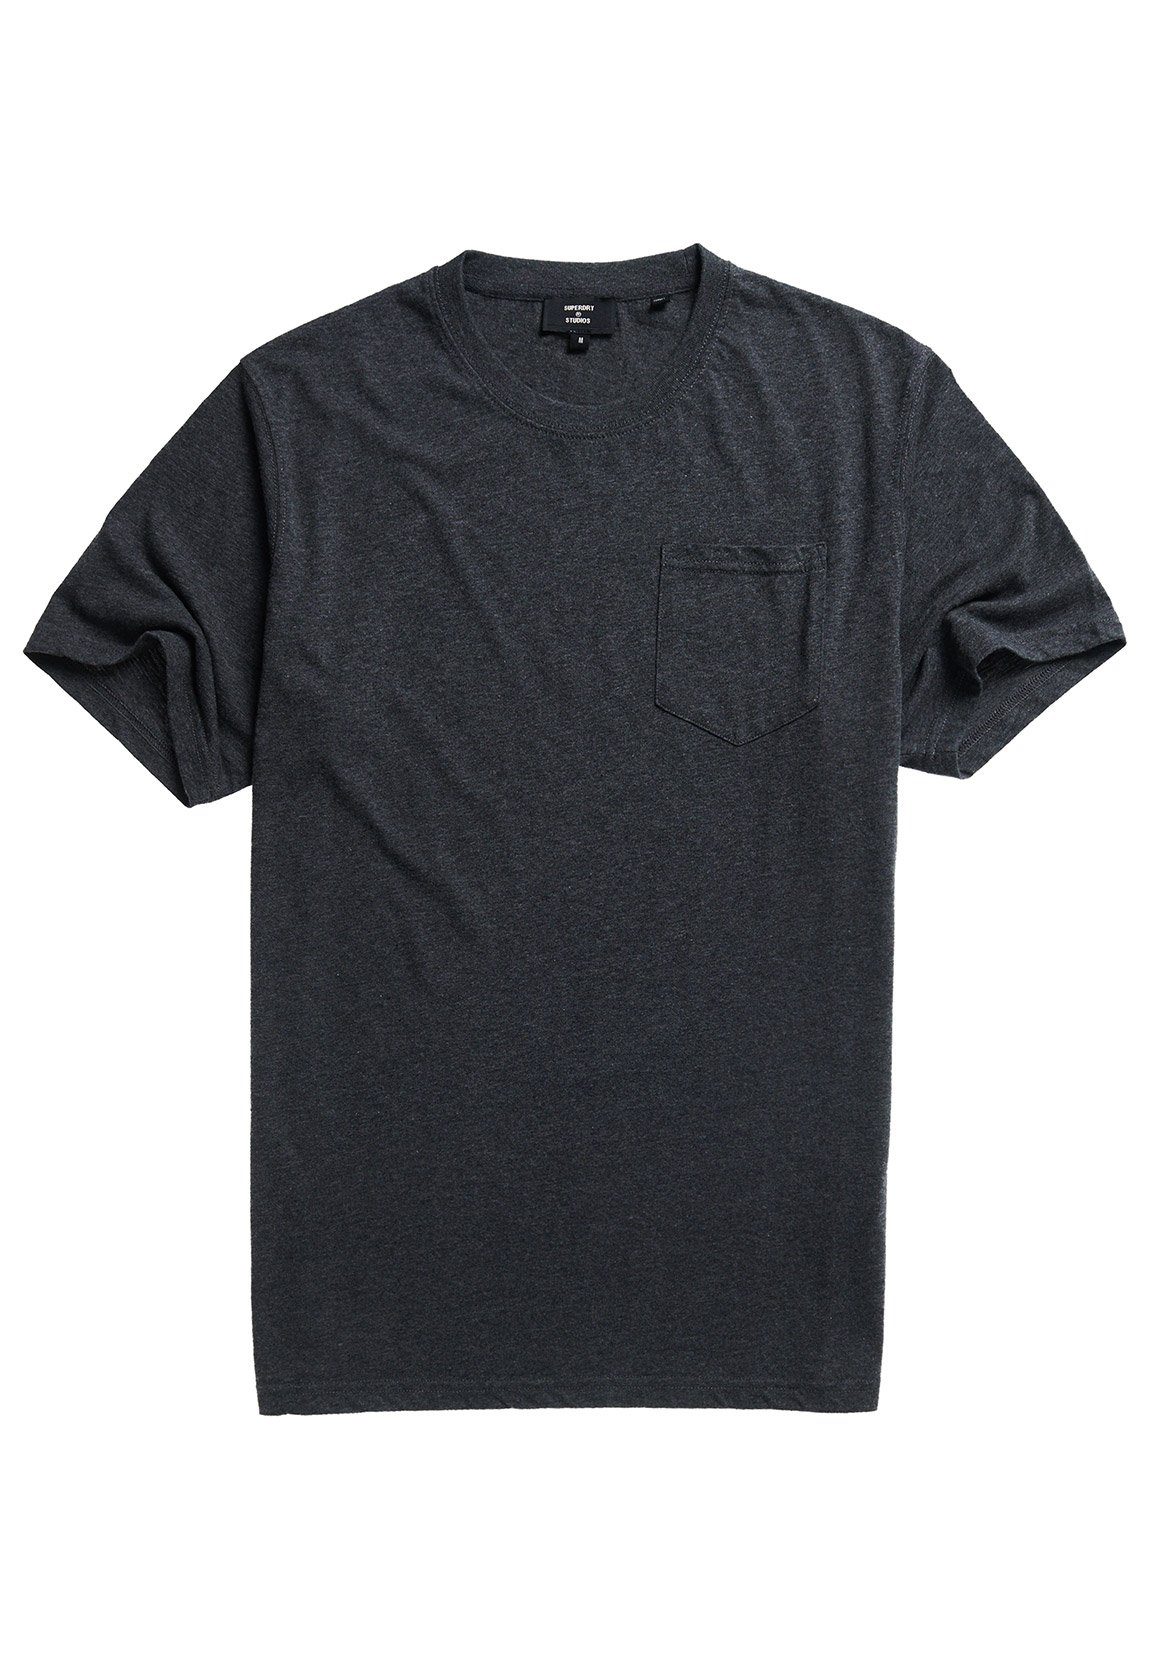 Superdry T-Shirt Superdry Herren Charcoal TEE AUTHENTIC T-Shirt COTTON Dunkelgrau Marl